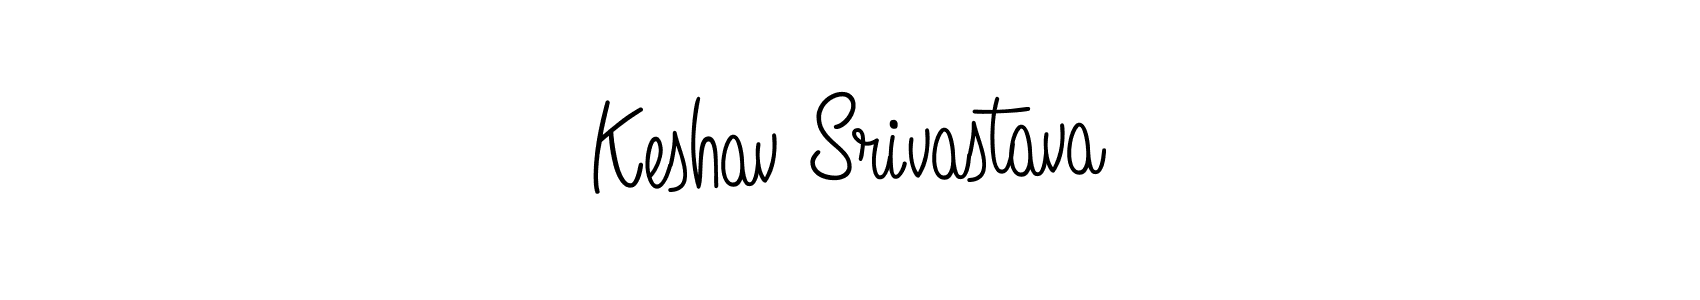 Make a beautiful signature design for name Keshav Srivastava. Use this online signature maker to create a handwritten signature for free. Keshav Srivastava signature style 5 images and pictures png